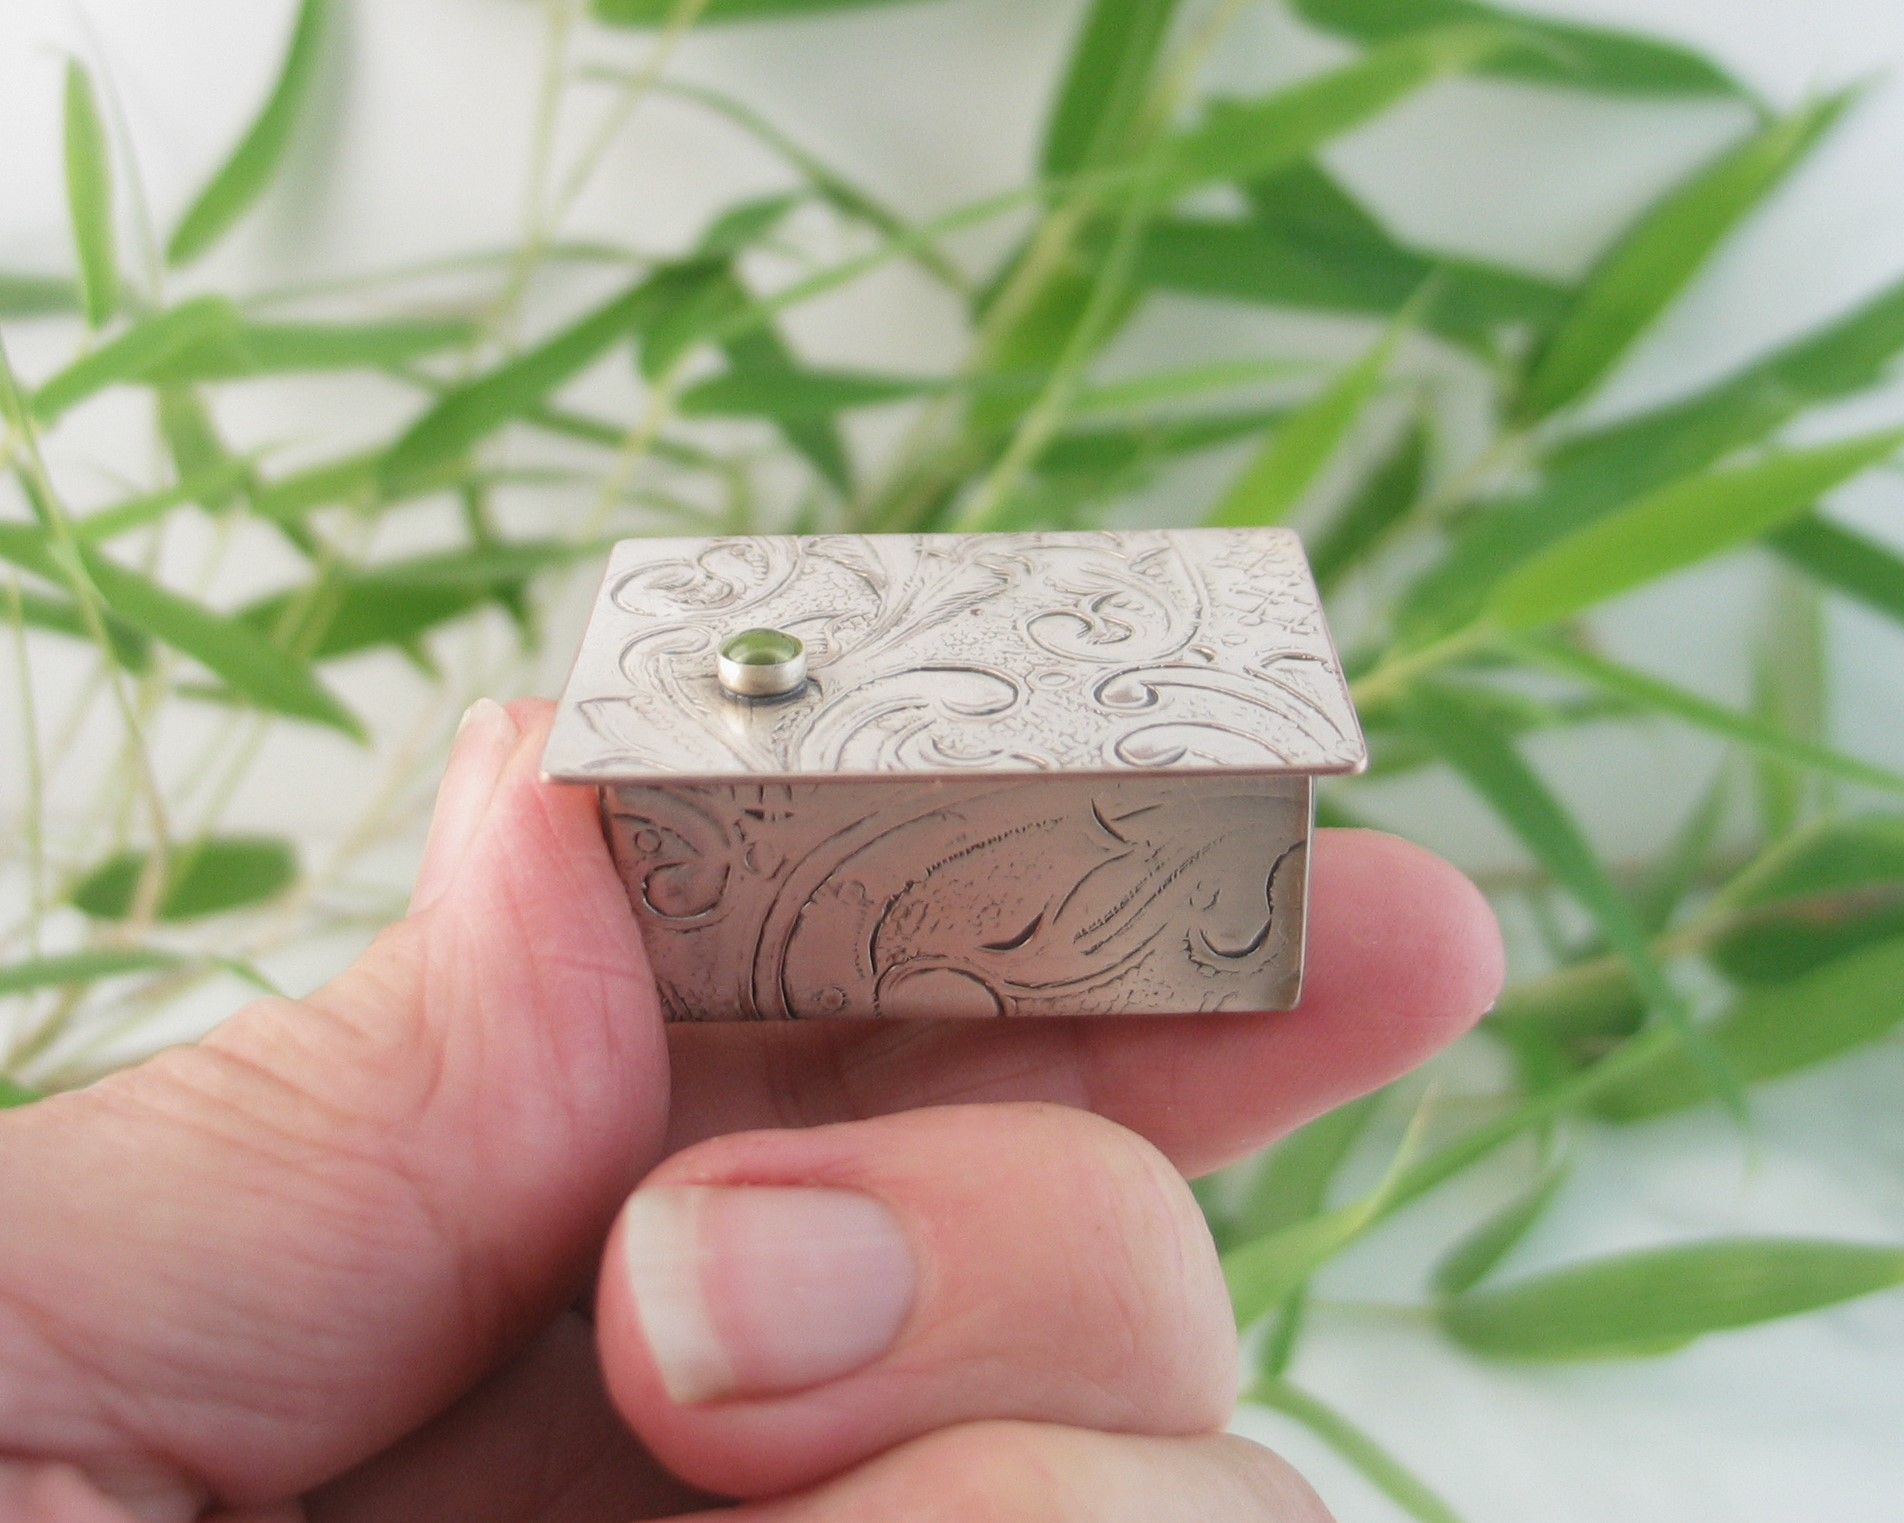 Miniature Silver Trinket Box with peridot gemstone, held by fingers